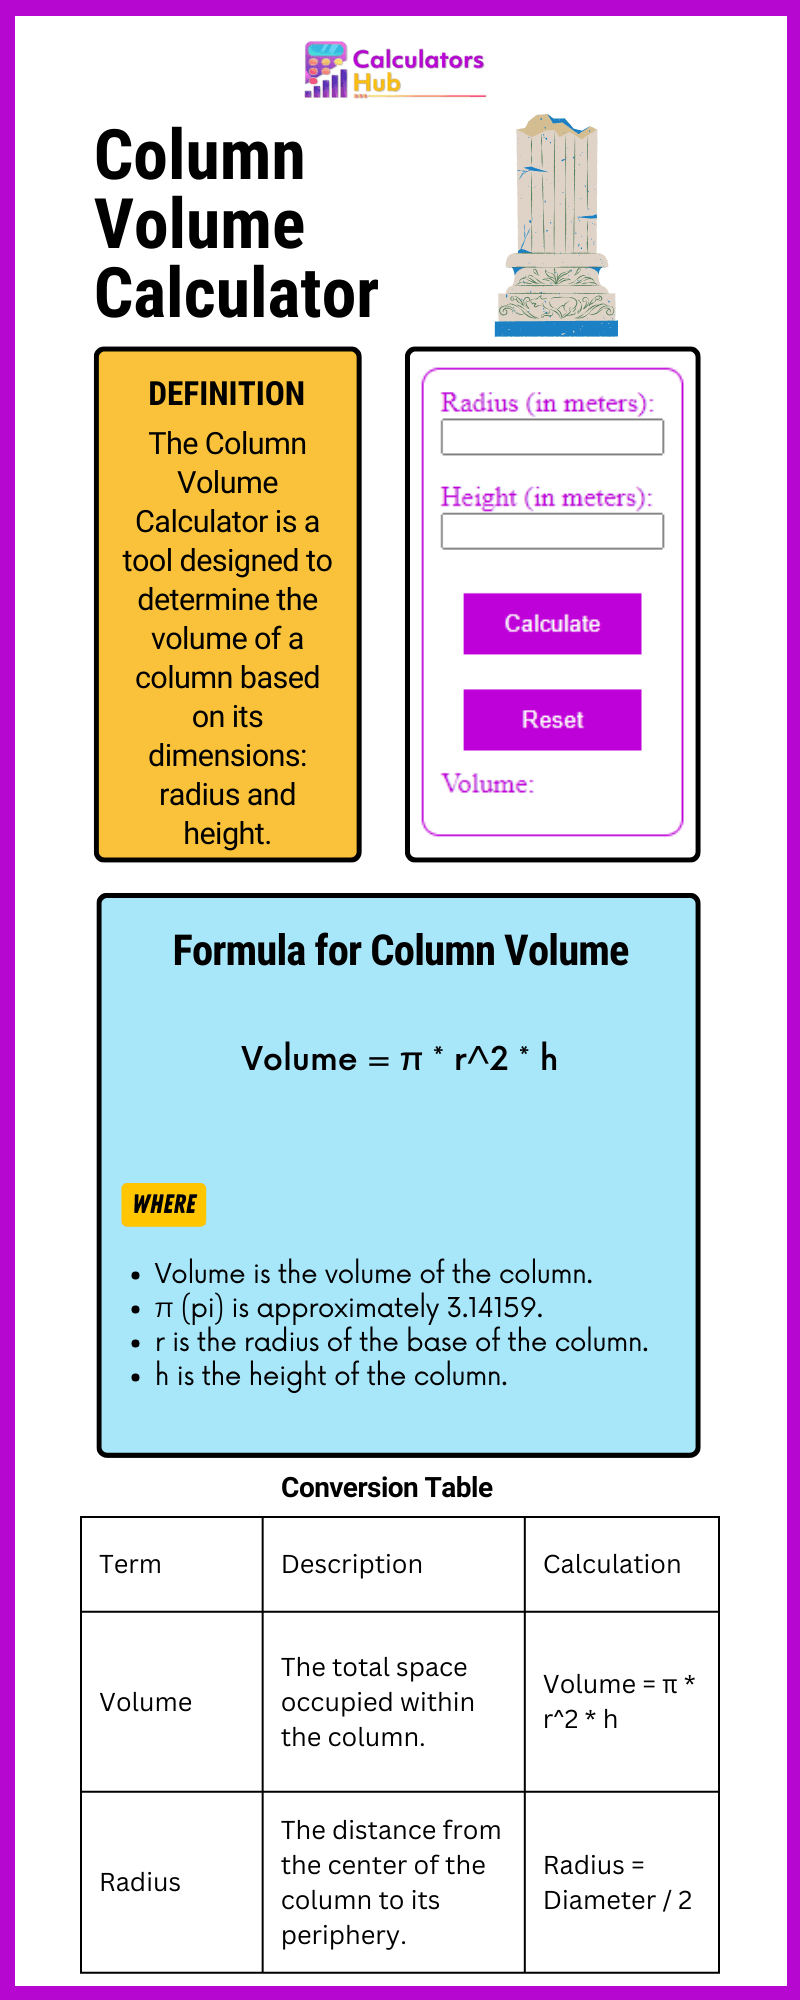 Column Volume Calculator